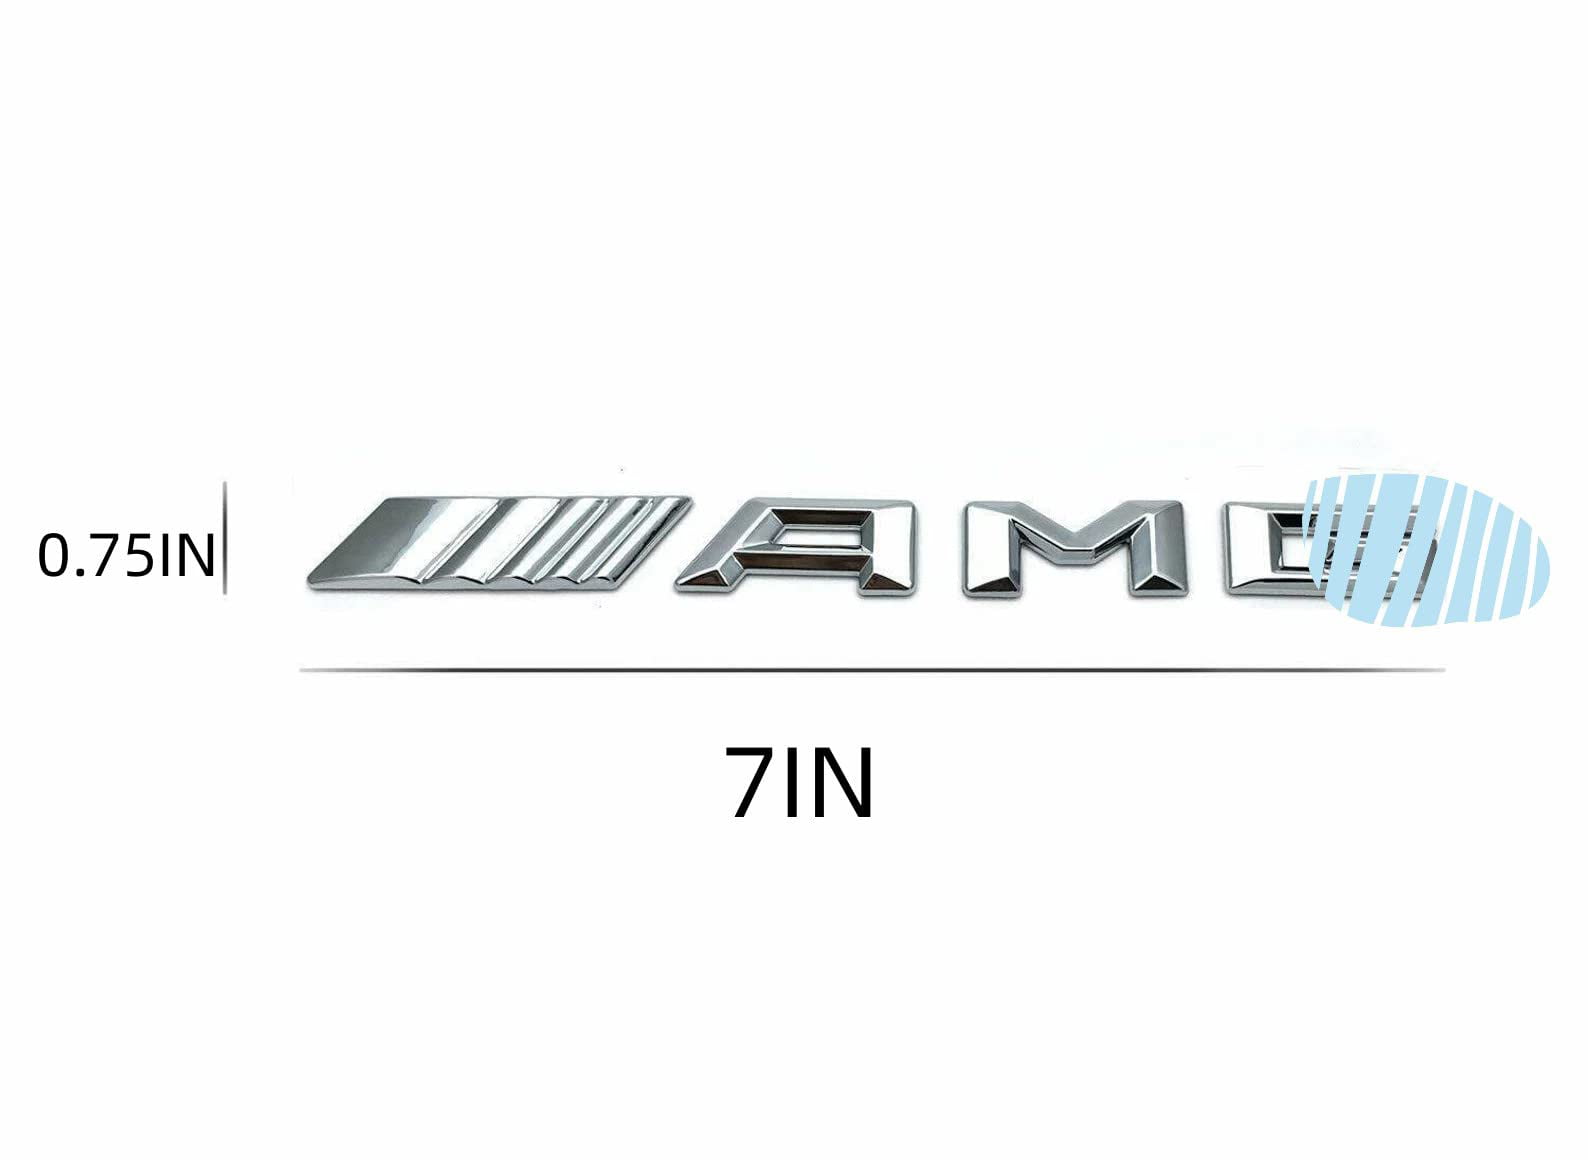 A M G Emblems 3D Raised Car Lettering Compatible for AMG Mercedes